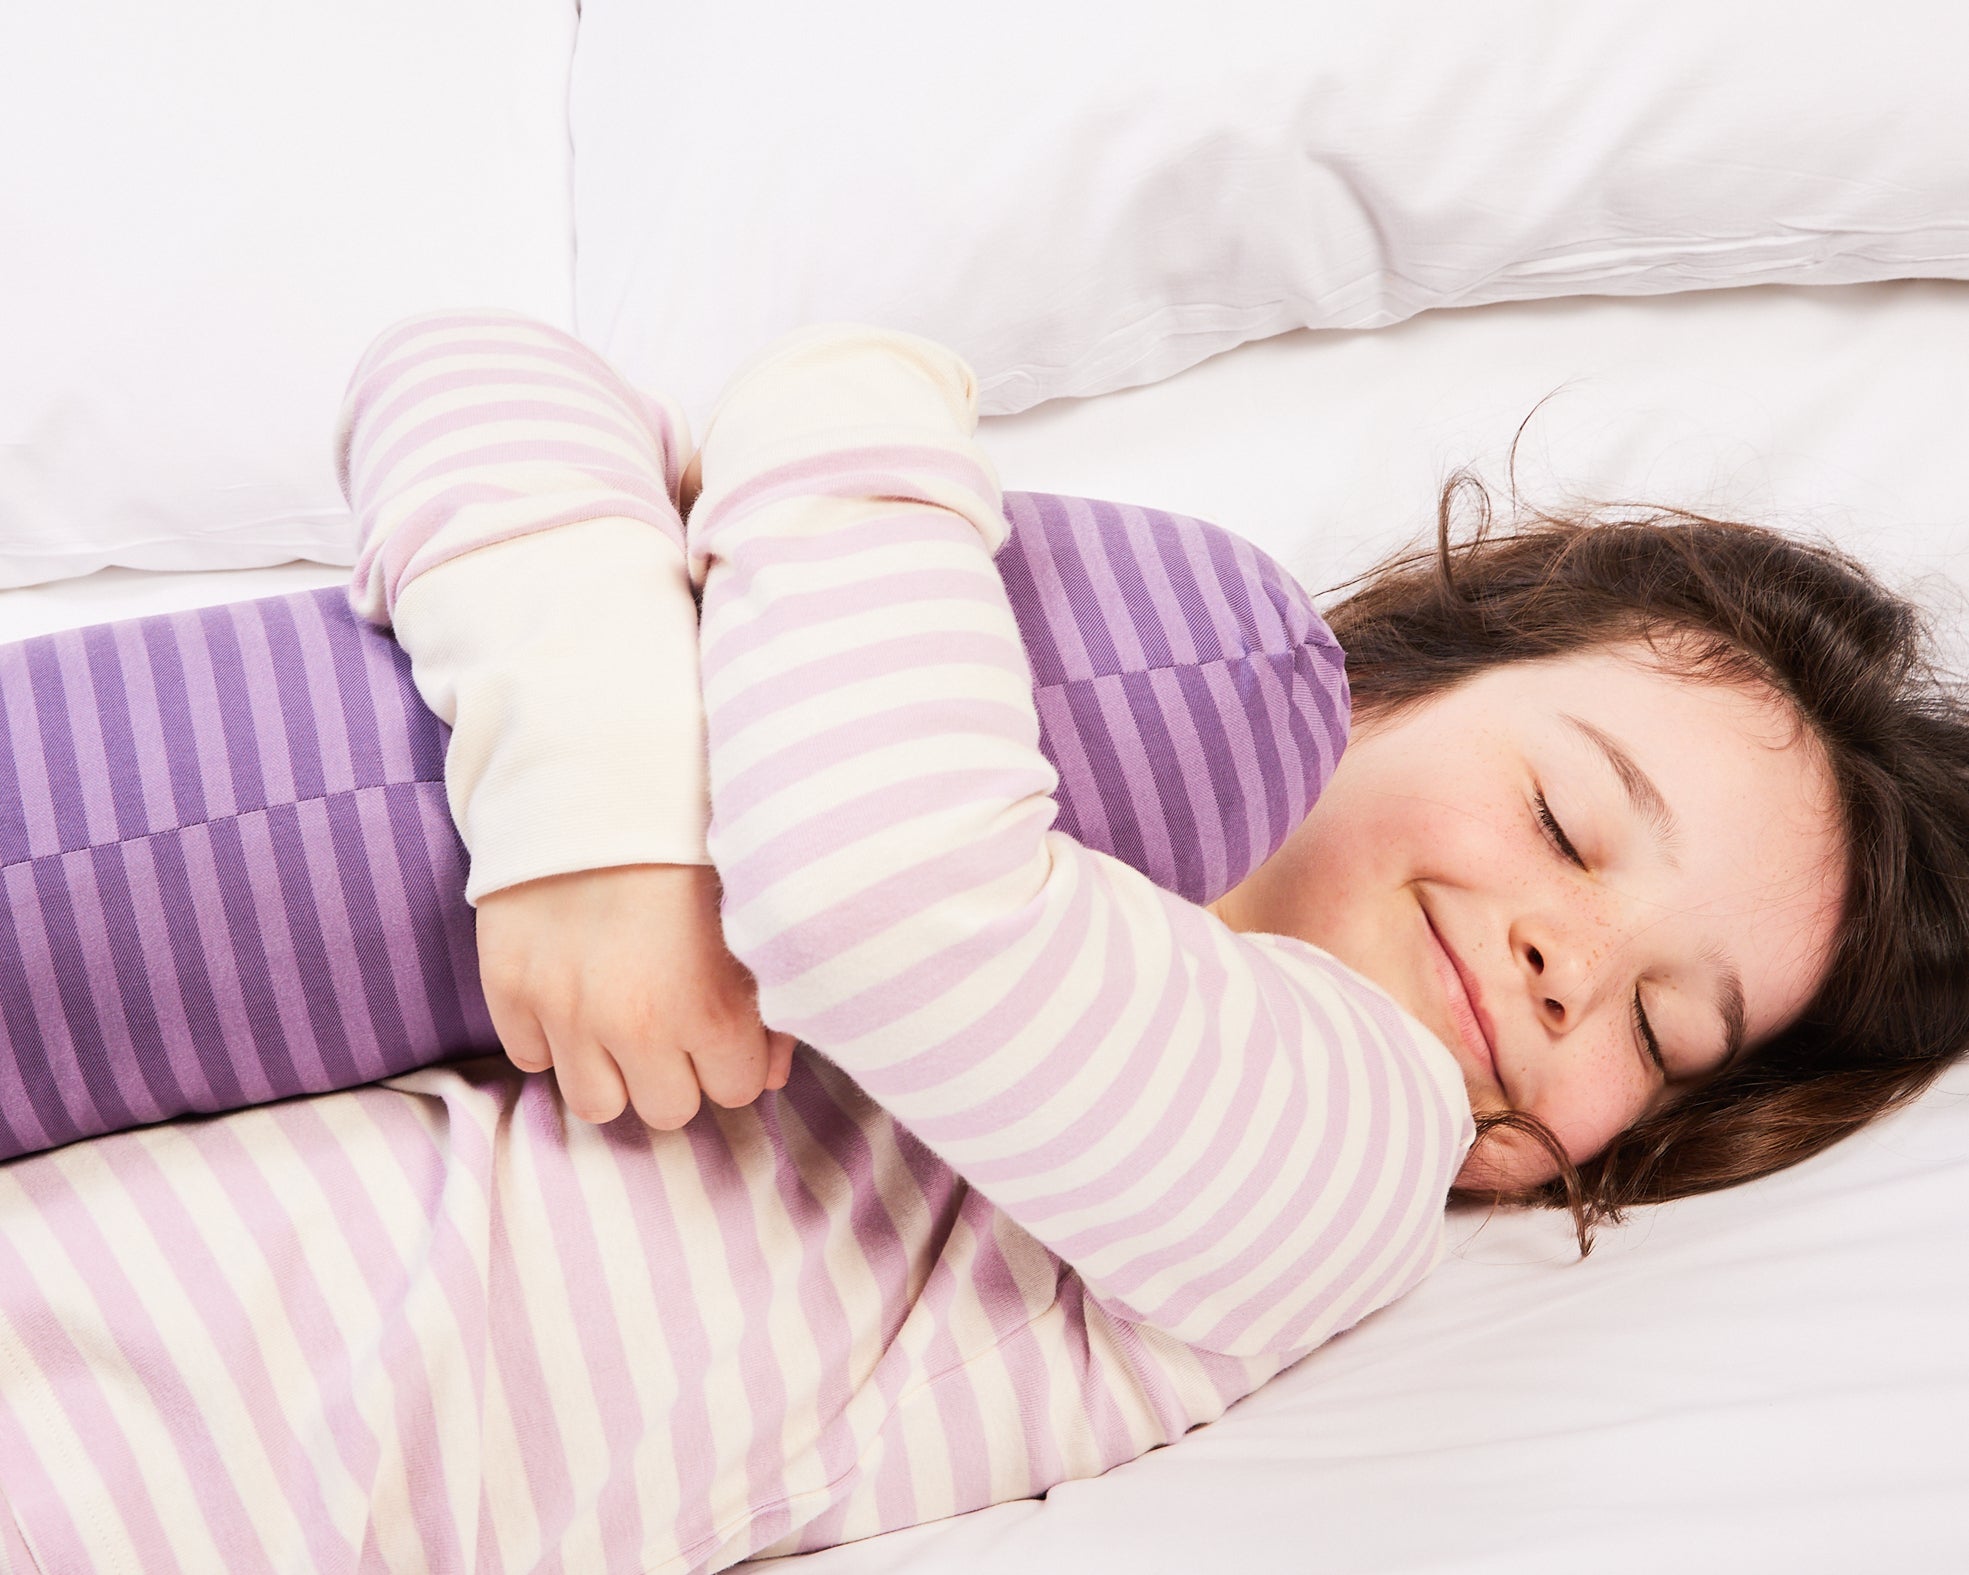 A young girl fell asleep hugging her weighted short pillow